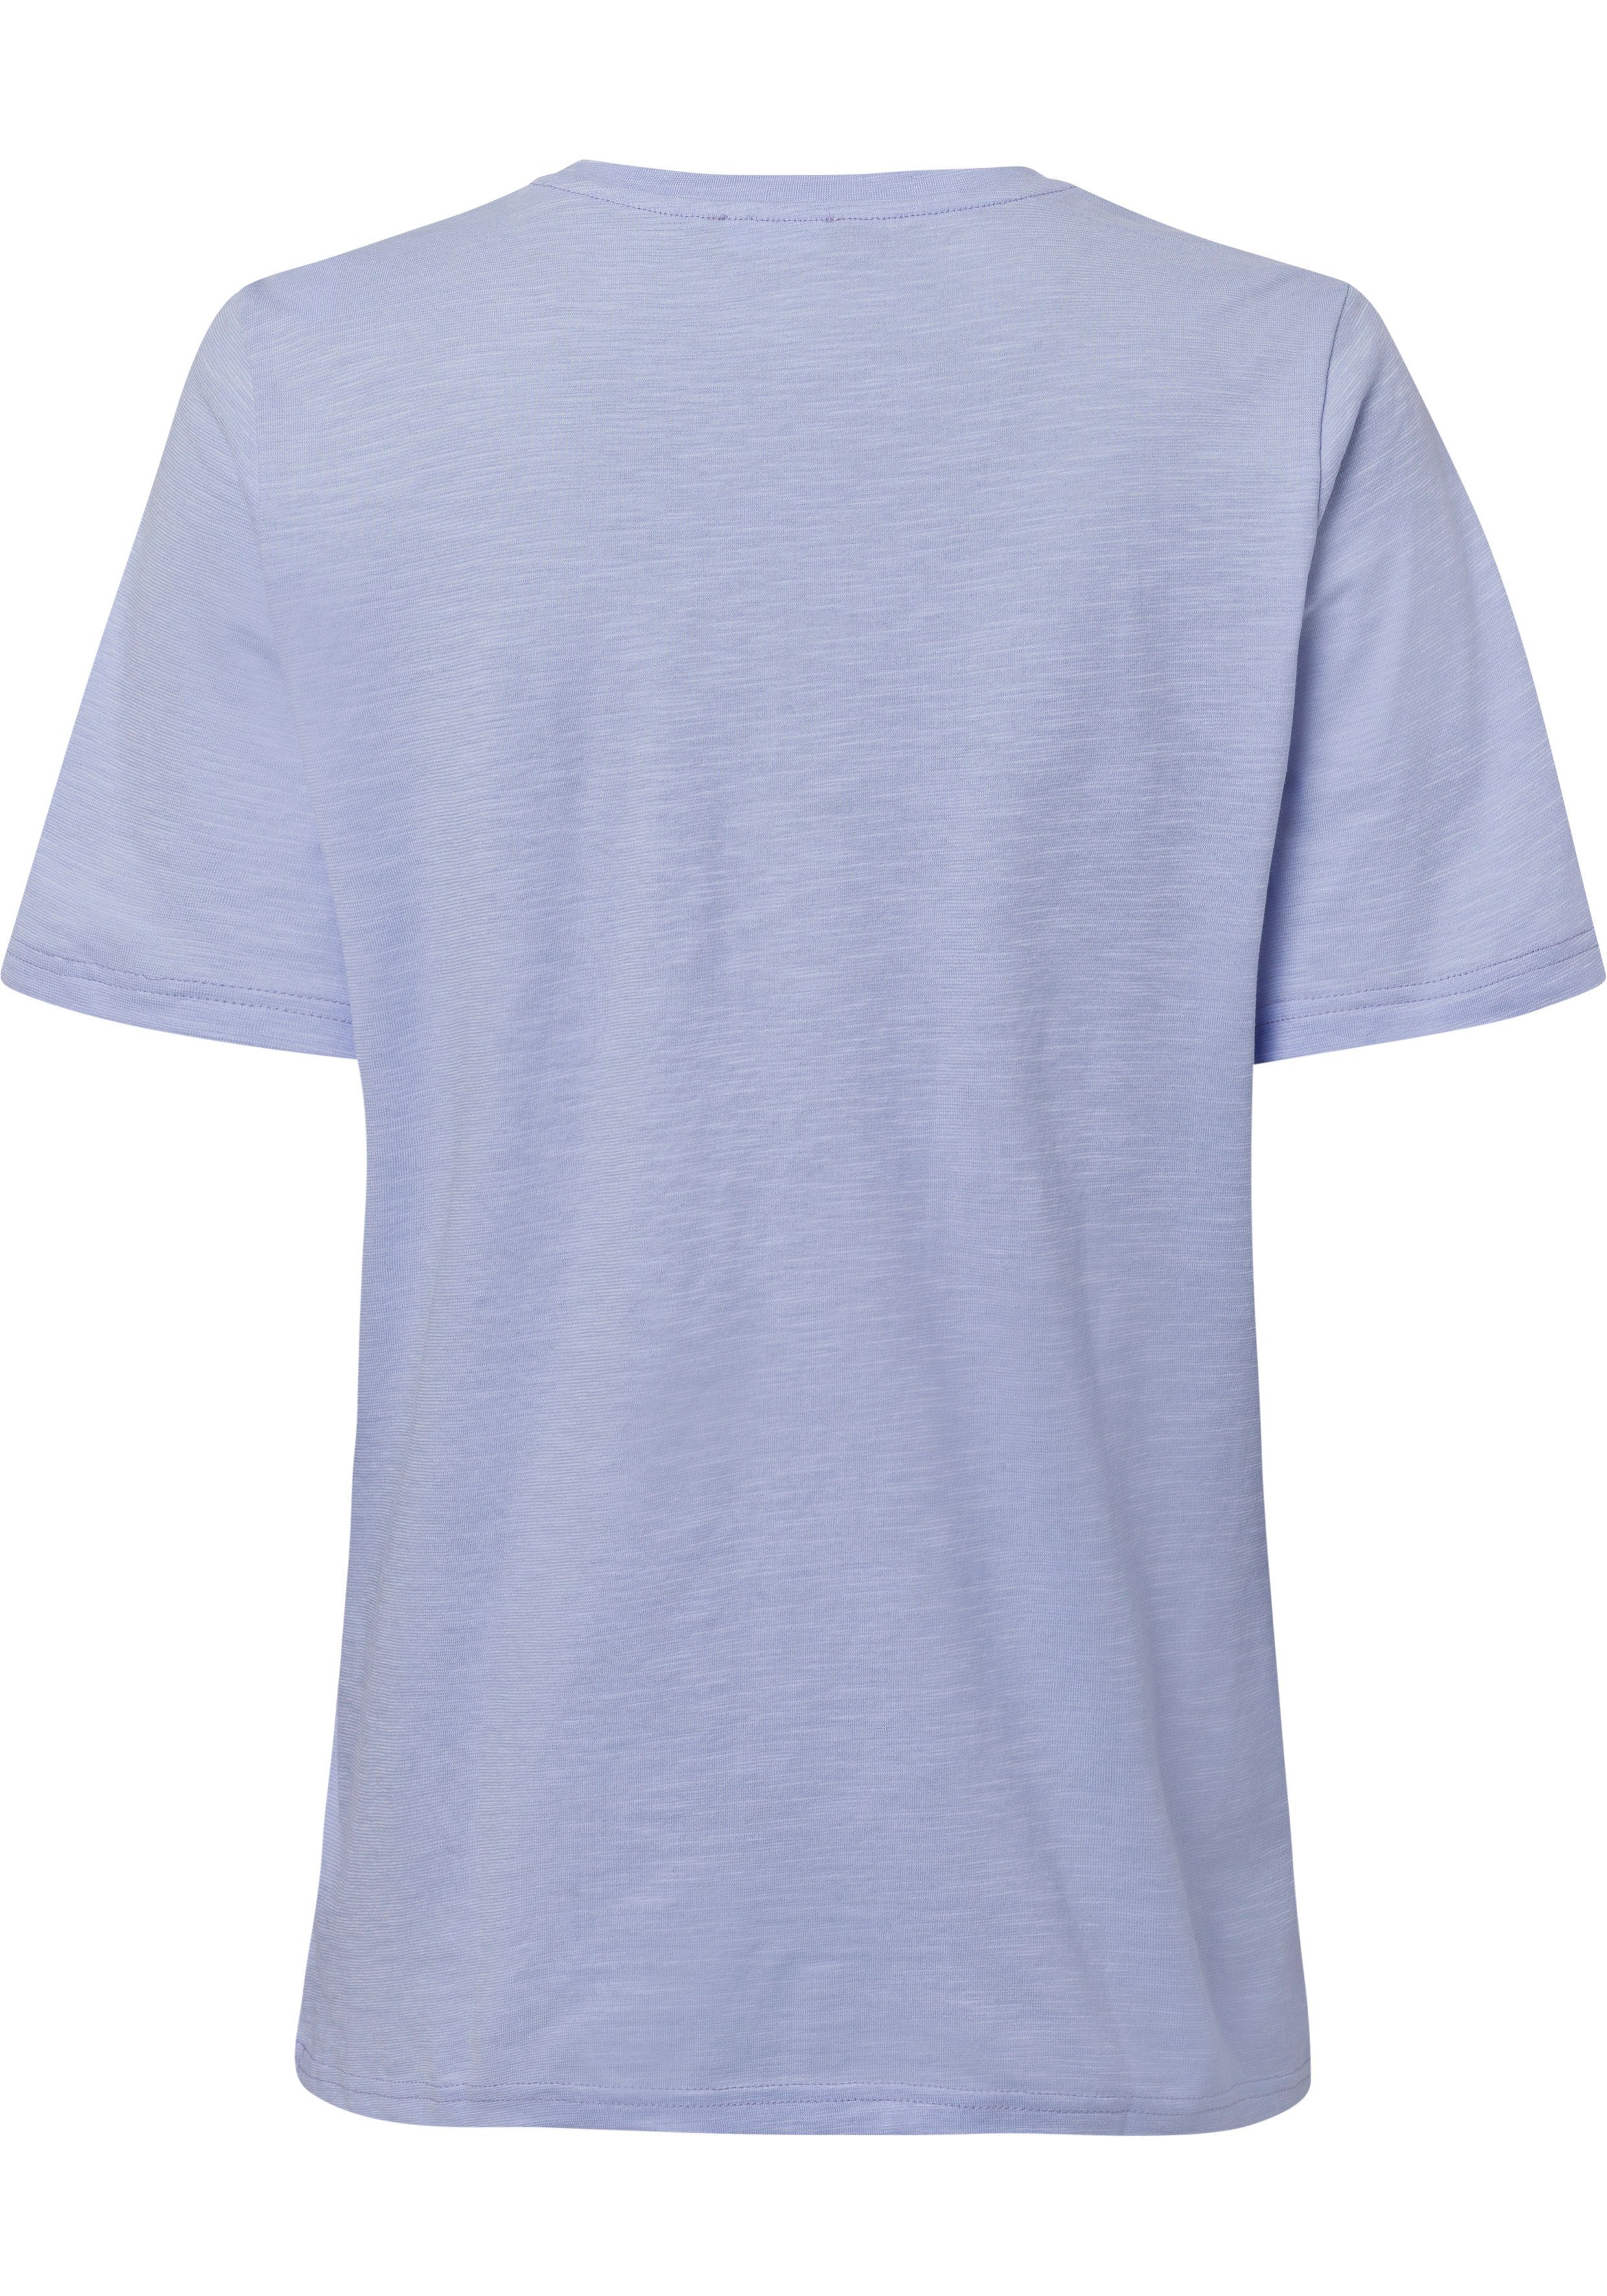 Basic-Optik of United flieder Benetton in Colors T-Shirt cleaner